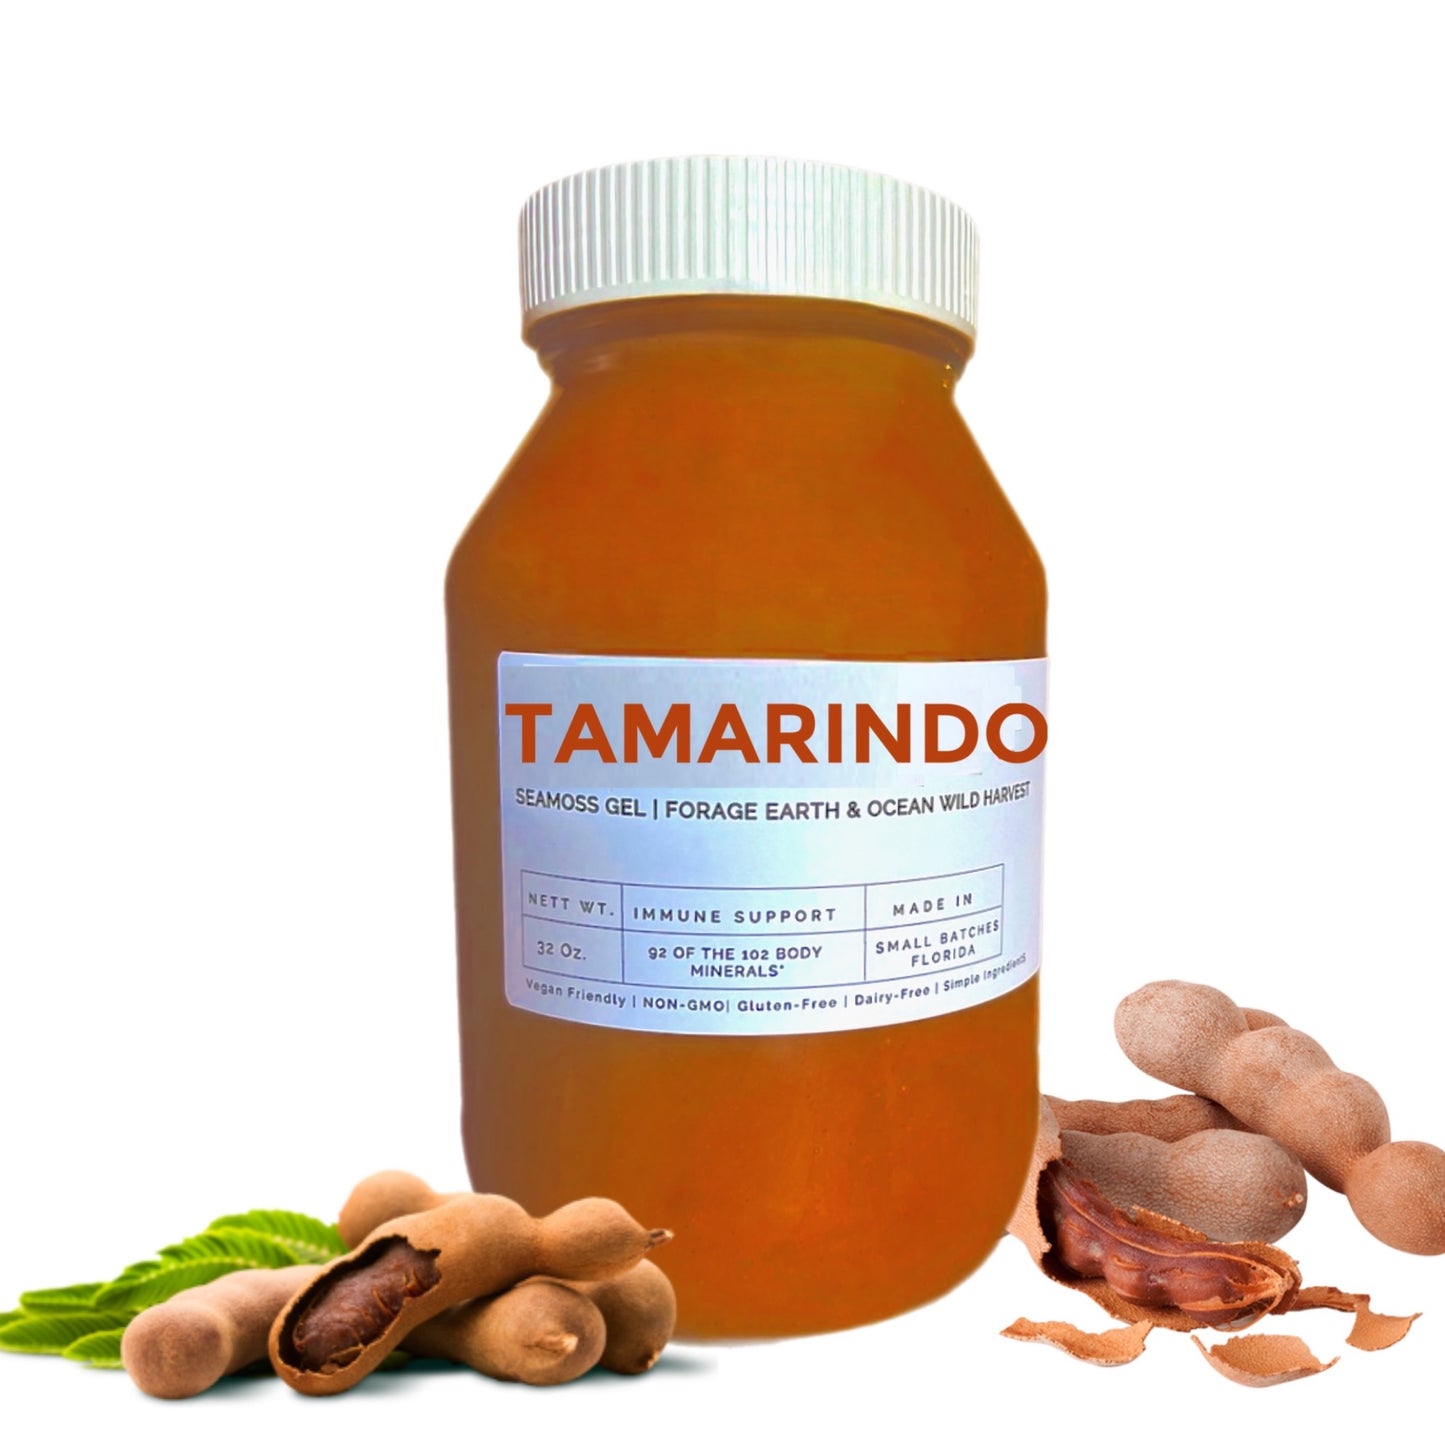 Tamarindo Seamoss Gel (WILD HARVEST)